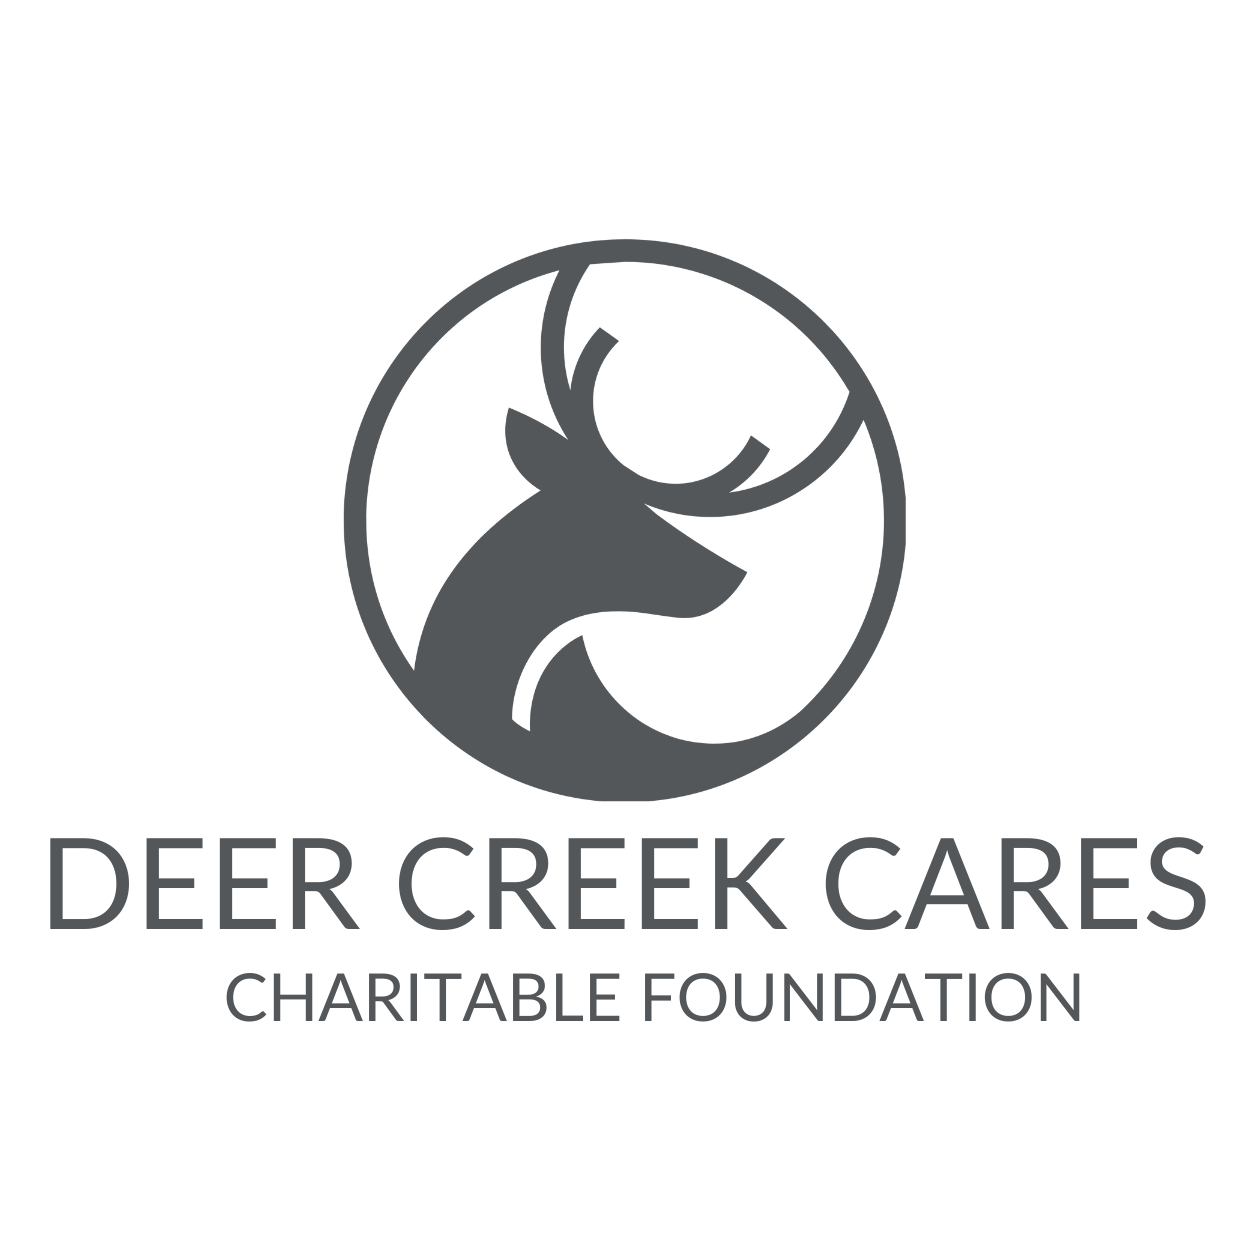 deer creek cares logo